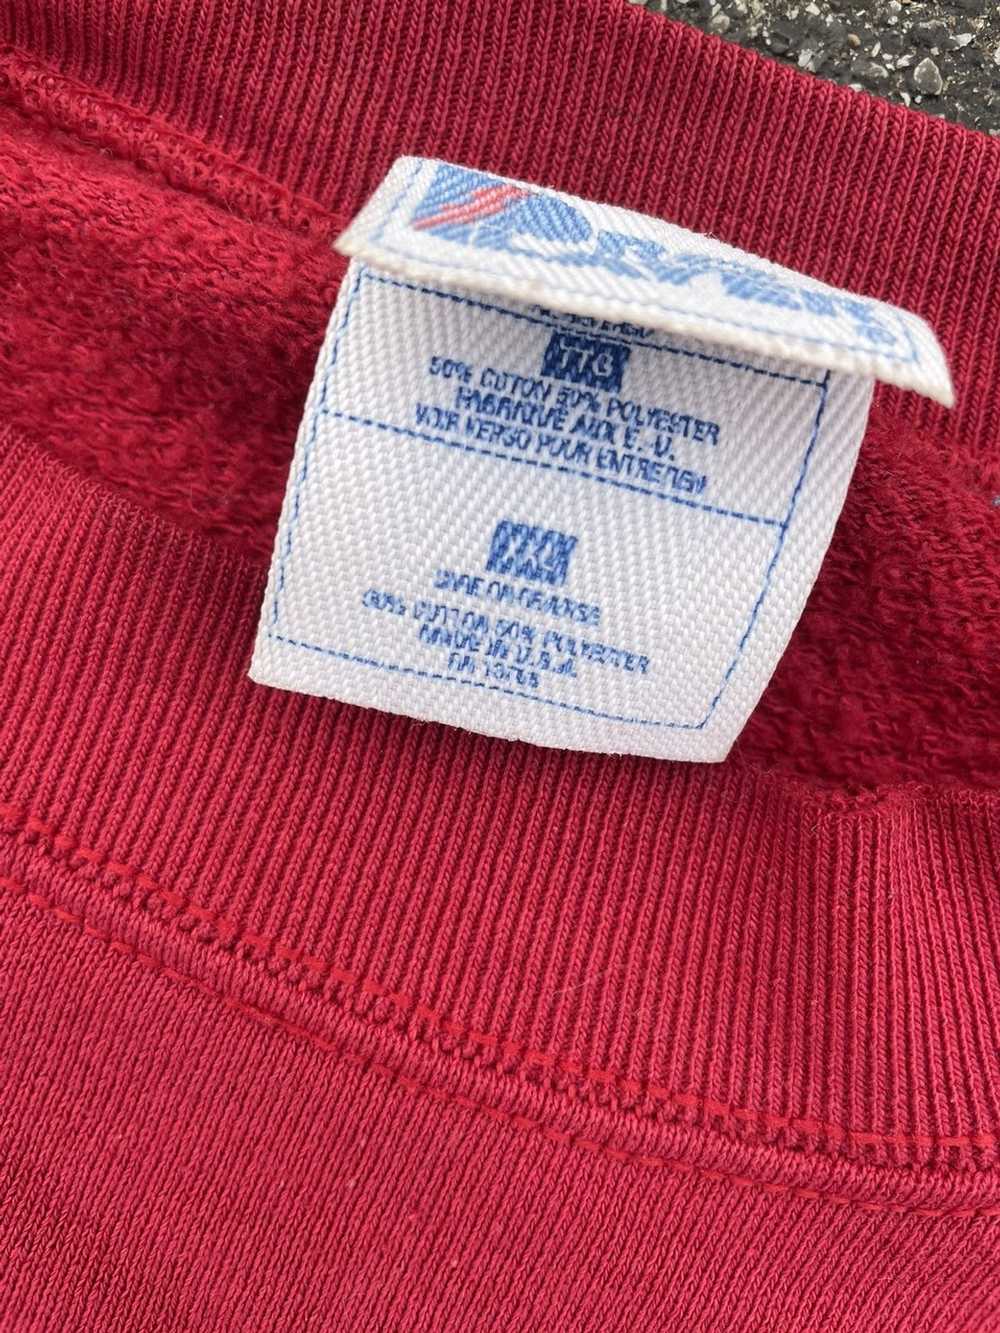 Vintage 90s San Francisco 49ers Sweatshirt - image 2